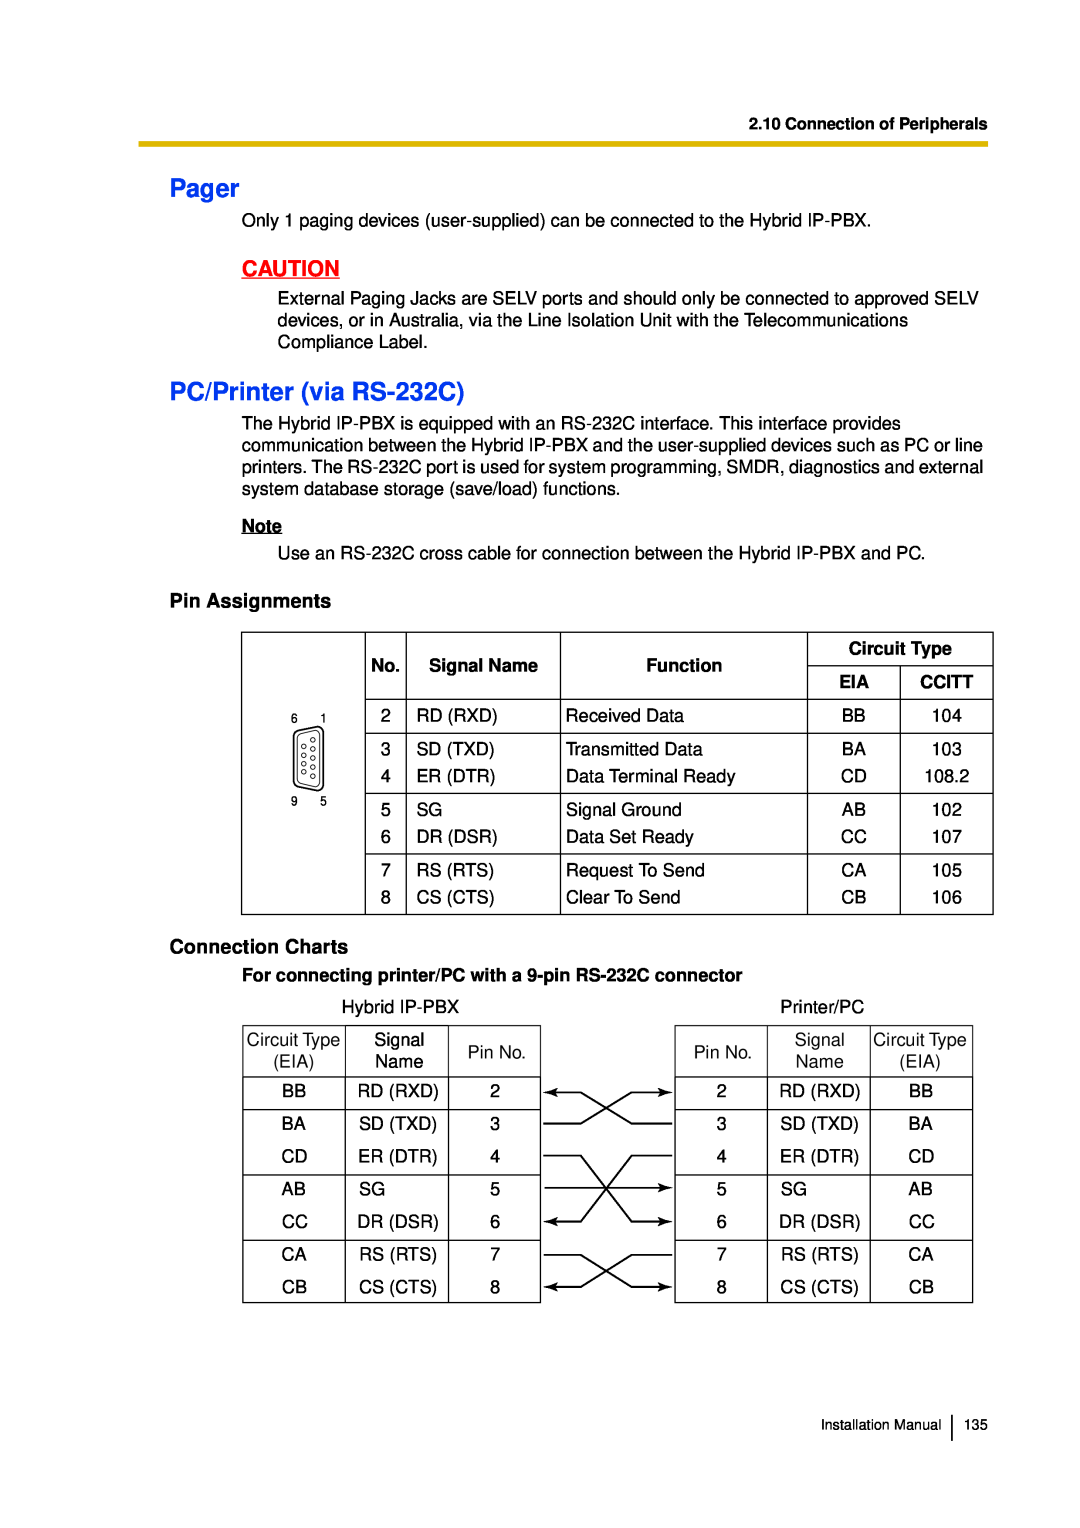 Panasonic KX-TDA30 installation manual Pager, PC/Printer via RS-232C, Circuit Type, Signal Name, Function, Ccitt 